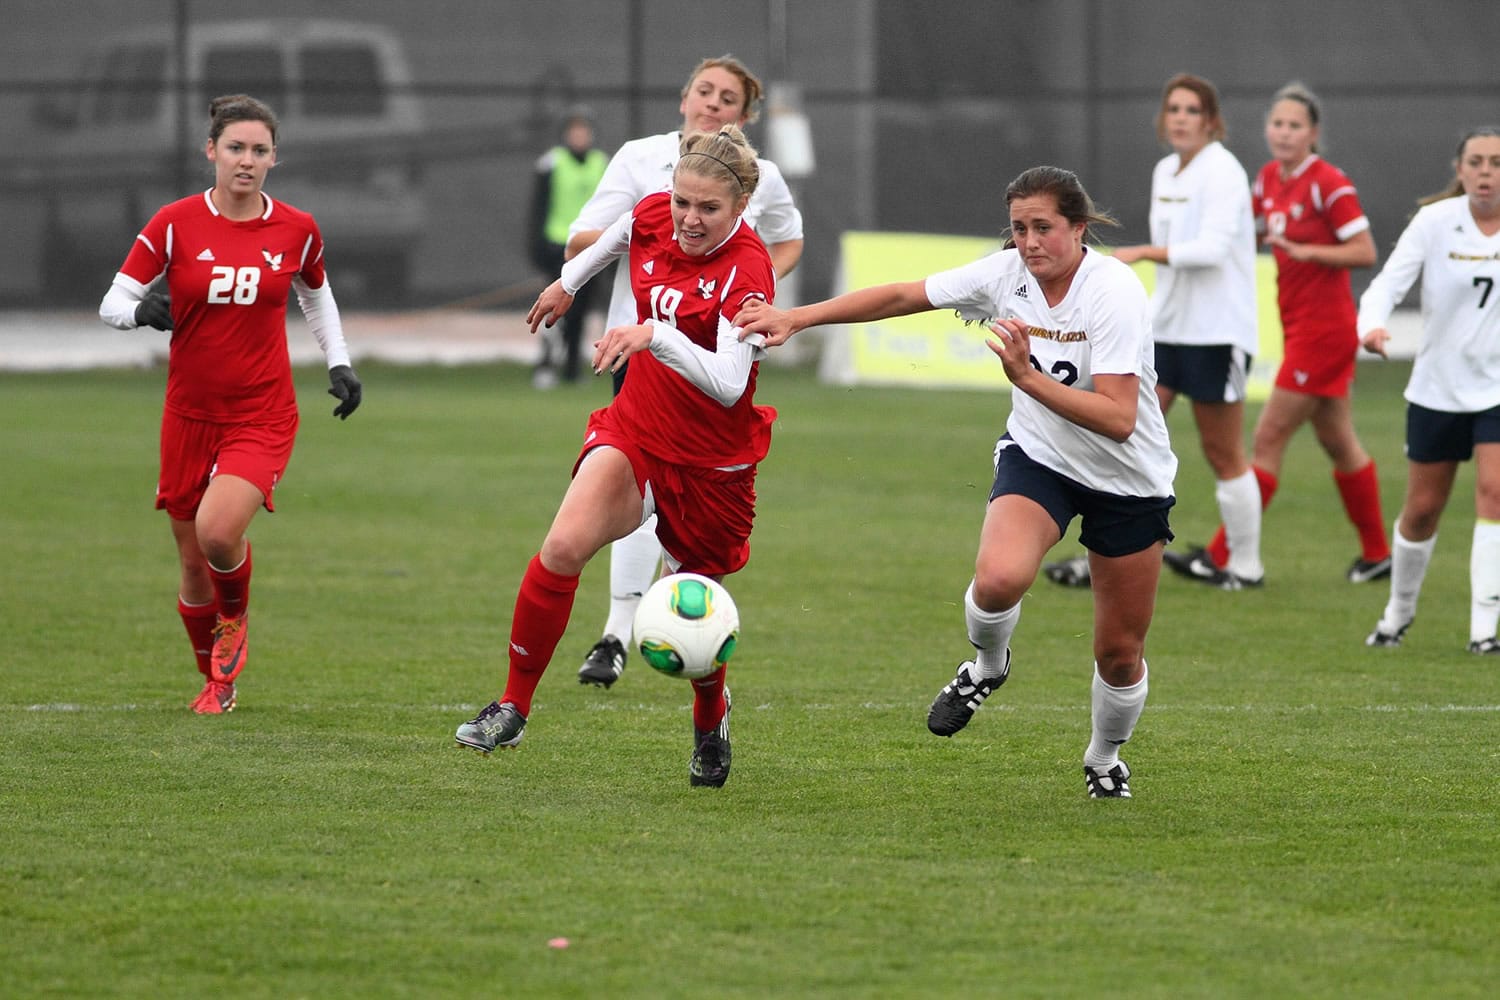 Battle Ground grad Cassie Black (19) plays soccer for Eastern Washington University.